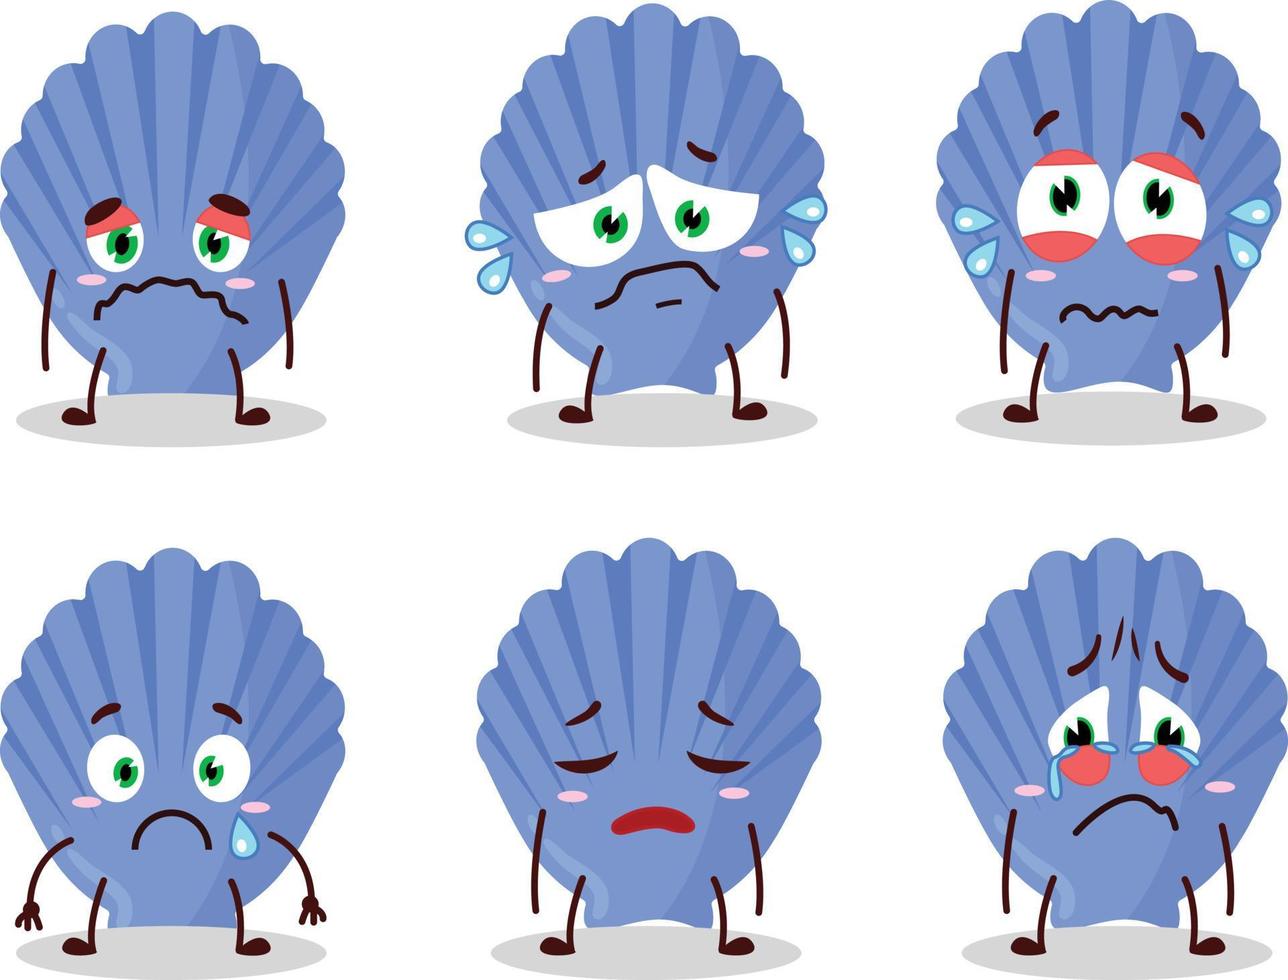 blå skal tecknad serie karaktär med ledsen uttryck vektor